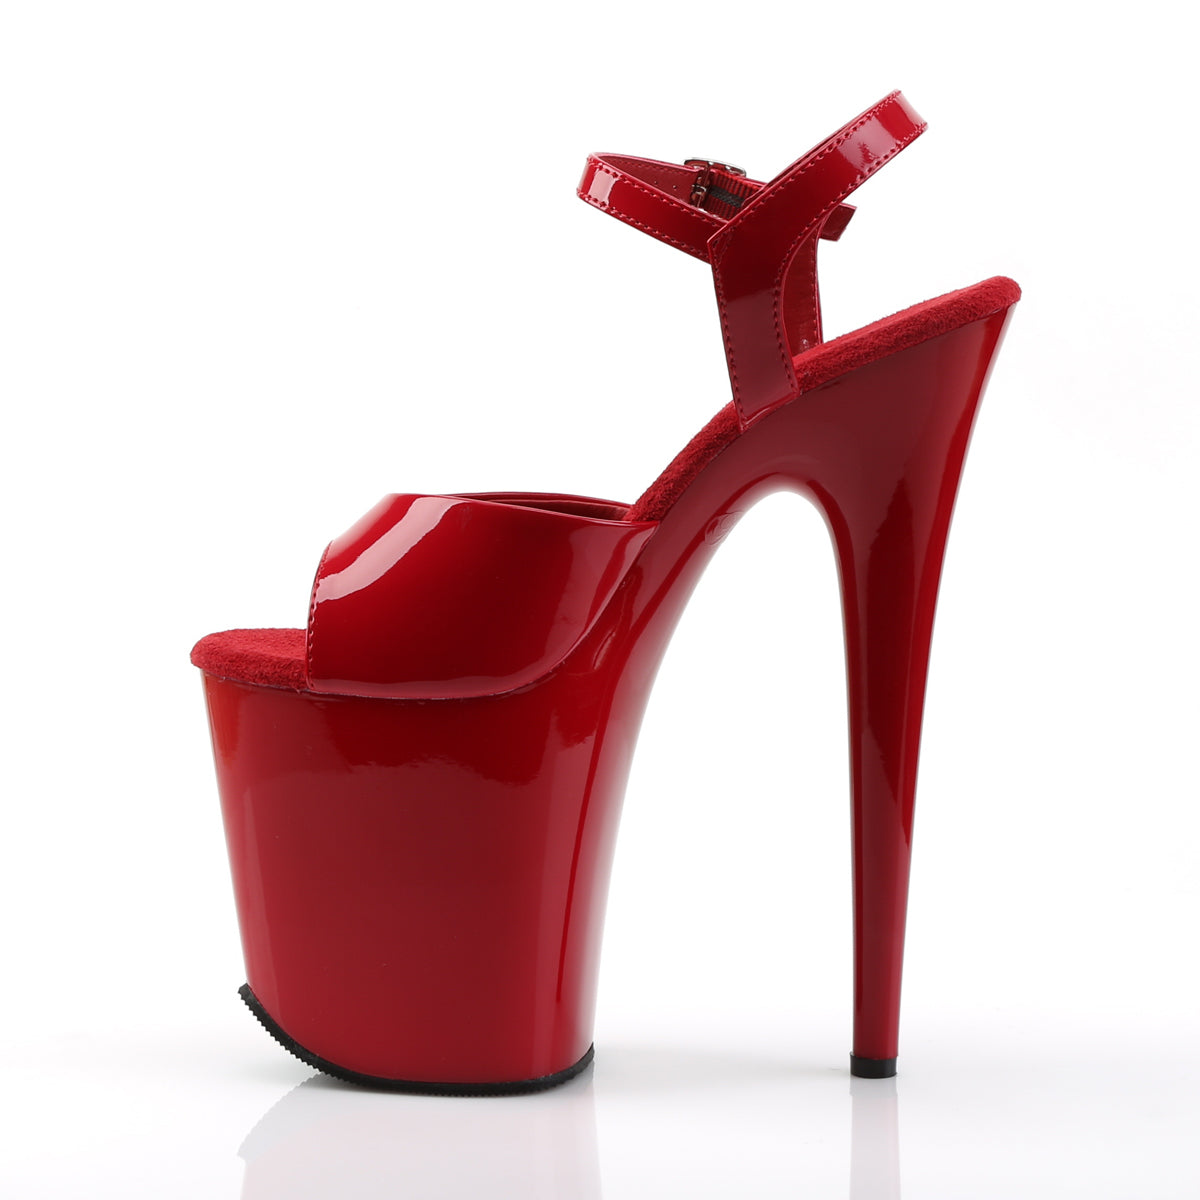 FLAMINGO-809 Pleaser 8 Inch Heel Red Pole Dancing Platforms-Pleaser- Sexy Shoes Pole Dance Heels